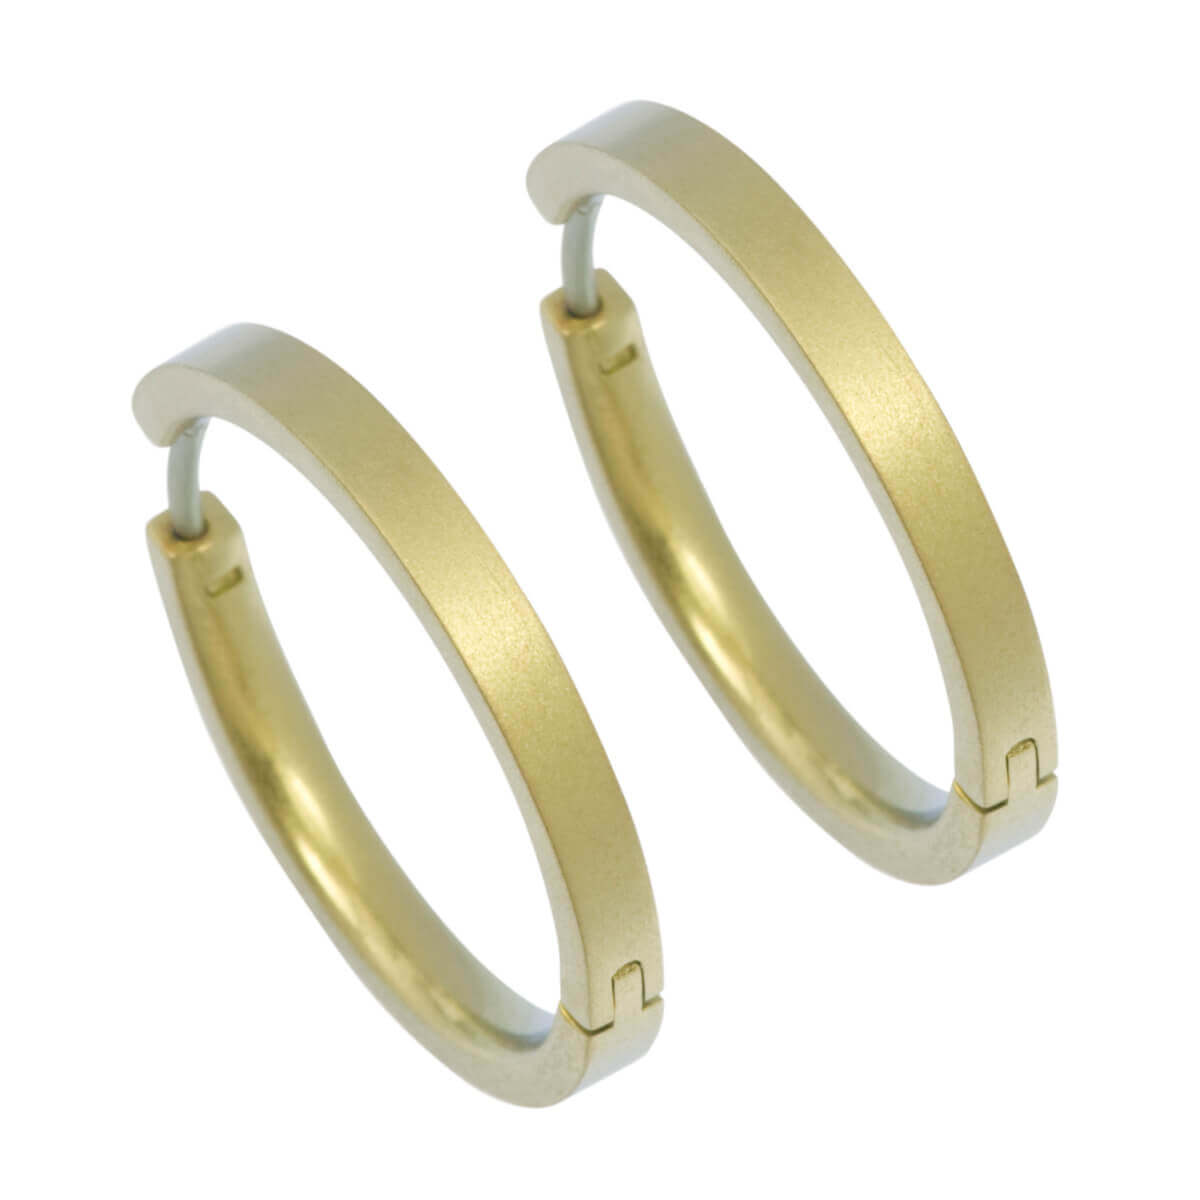 Titanium Medium Hinged Hoop Earrings - Natural Tones